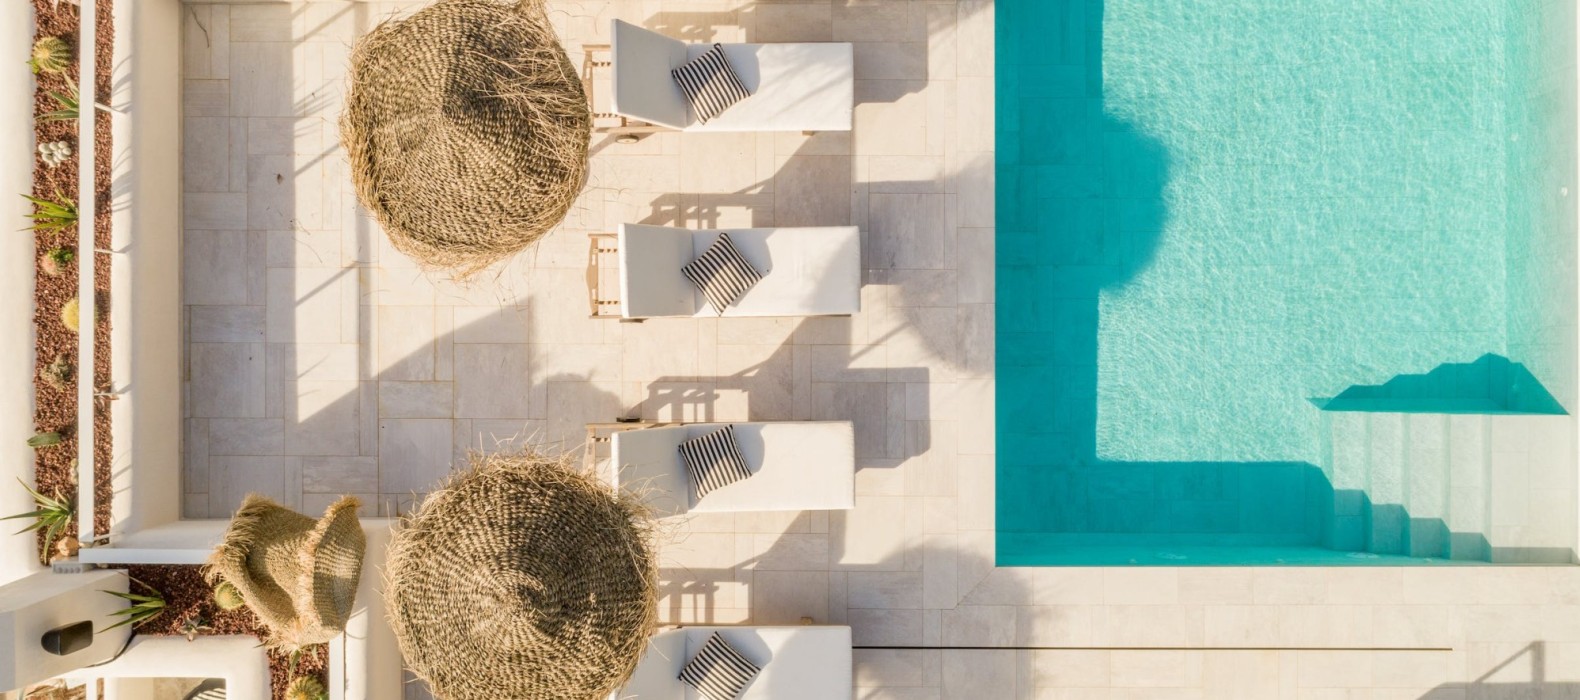 Pool view of Villa The Sweet Escape in Ibiza